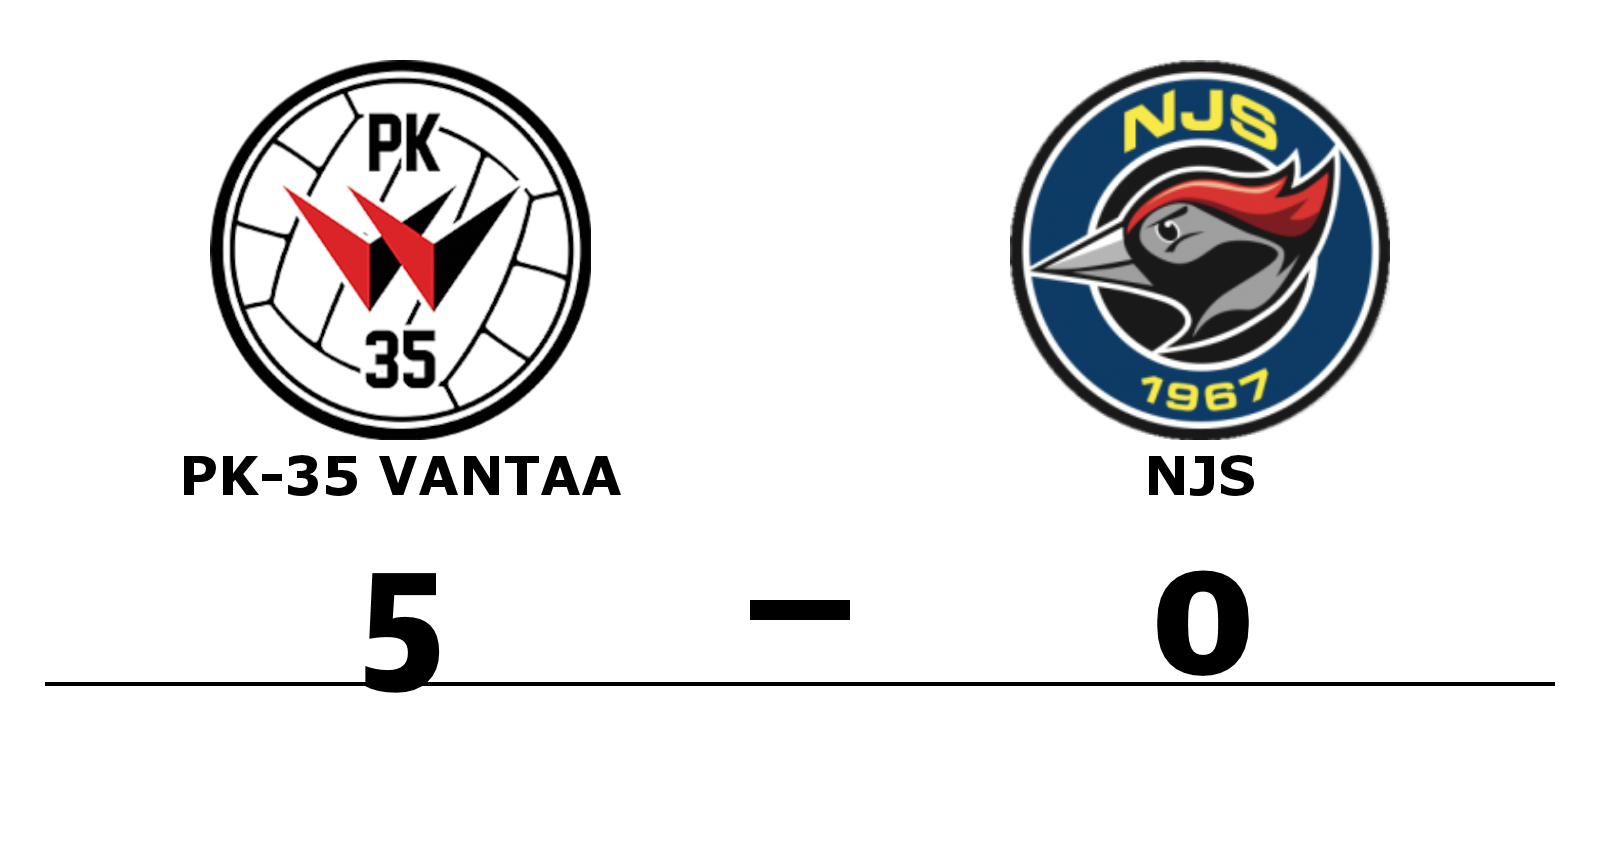 PK-35 Vantaa vann mot NJS